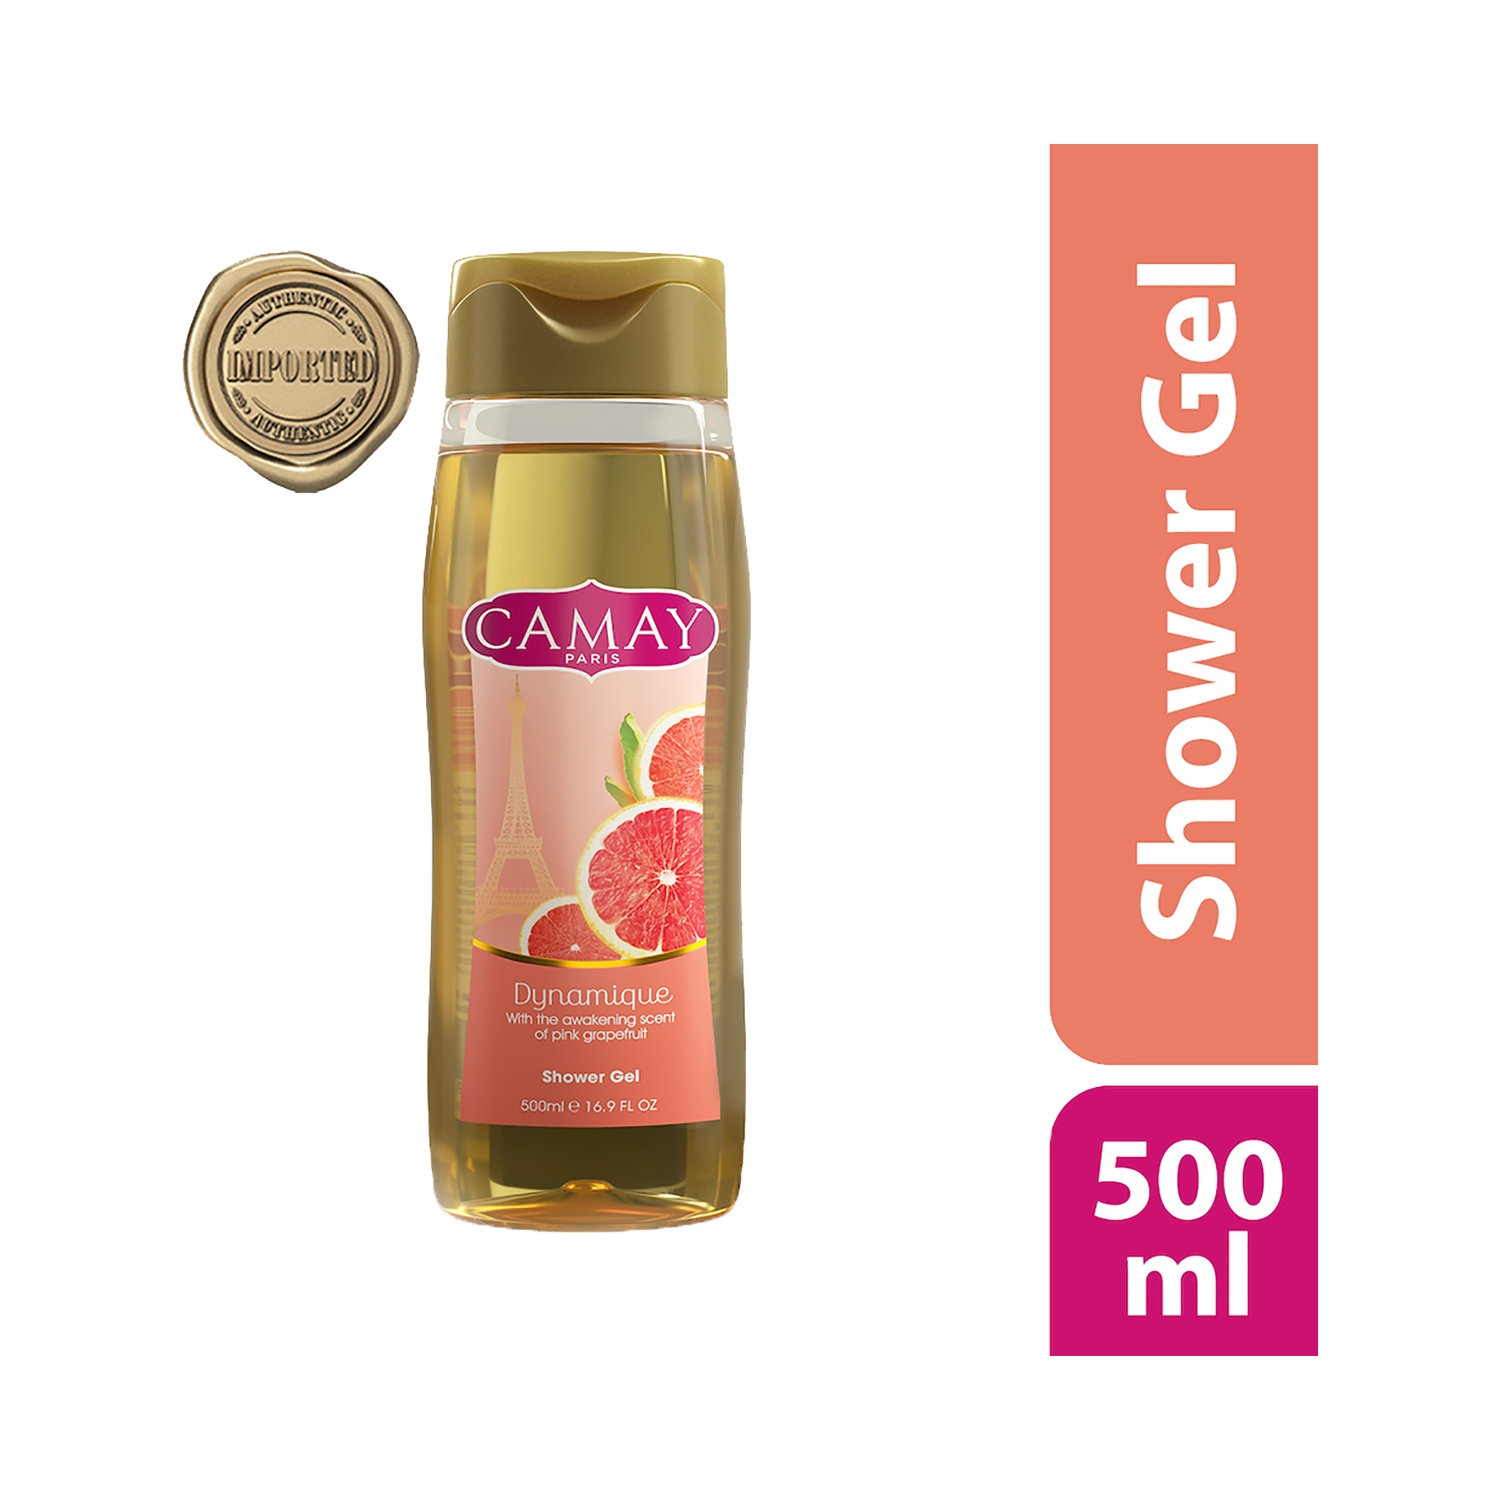 Camay | Camay Paris Dynamique Grapefruit Shower Gel with Natural Oils (500ml)